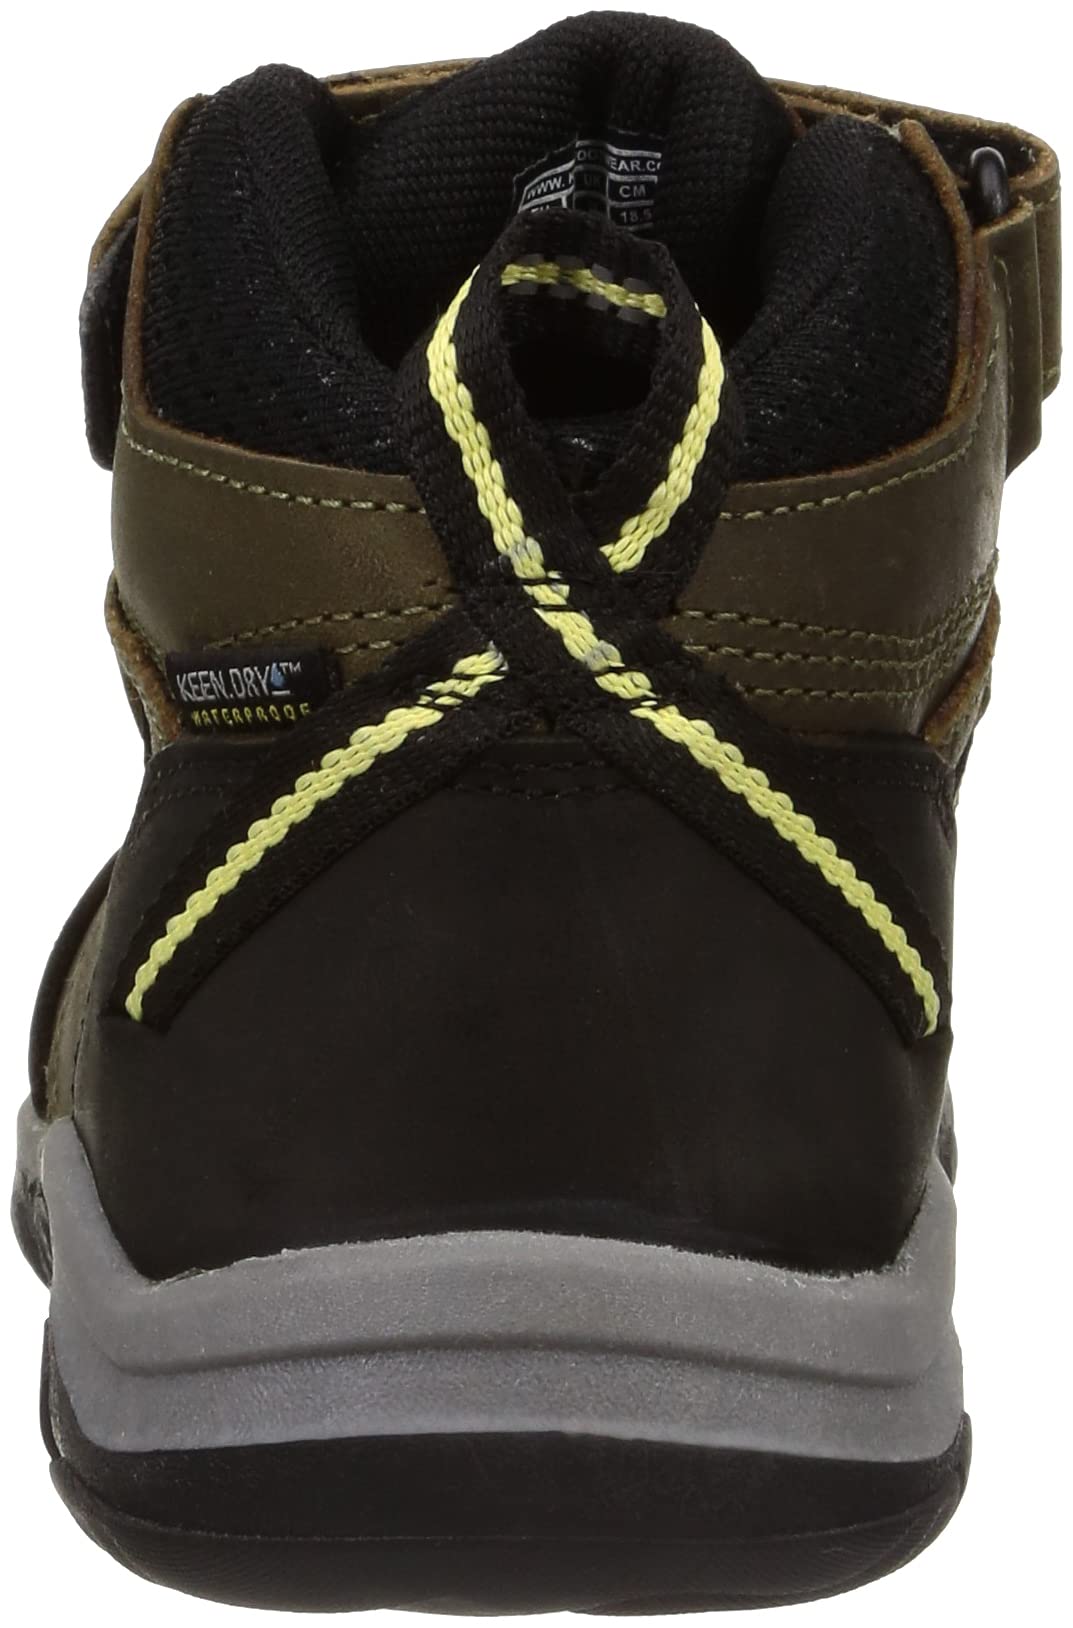 KEEN unisex child Ridge Flex Mid Height Waterproof Leather Hiking Boot, Bison/Red Carpet, 6 Big Kid US